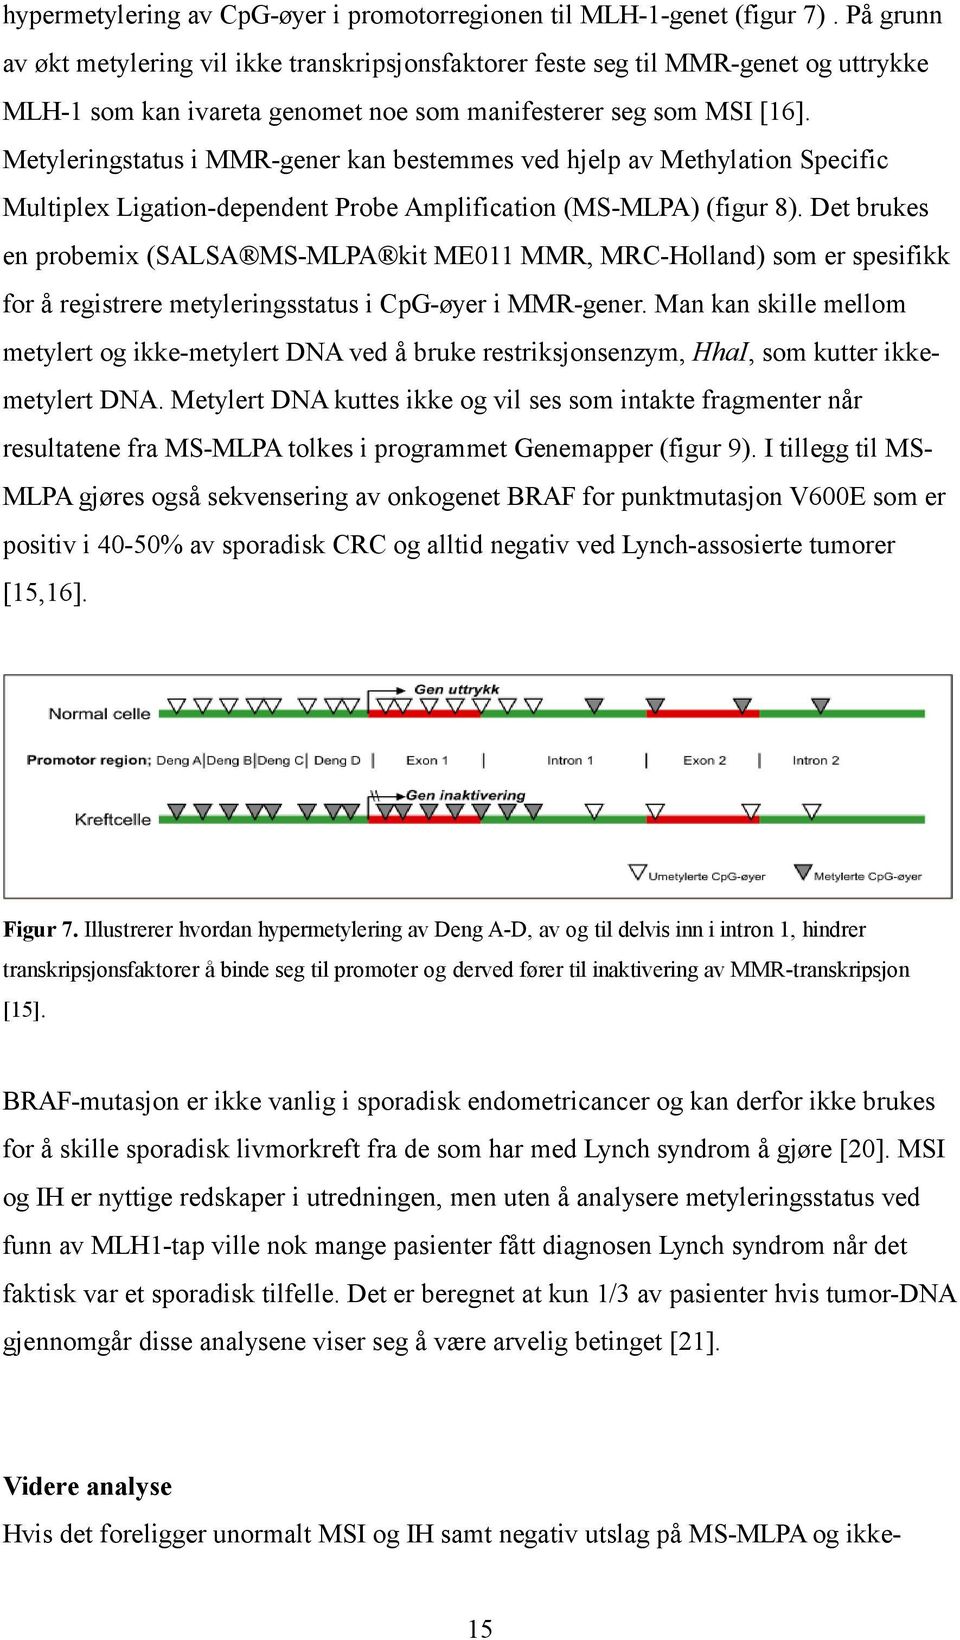 Metyleringstatus i MMR-gener kan bestemmes ved hjelp av Methylation Specific Multiplex Ligation-dependent Probe Amplification (MS-MLPA) (figur 8).